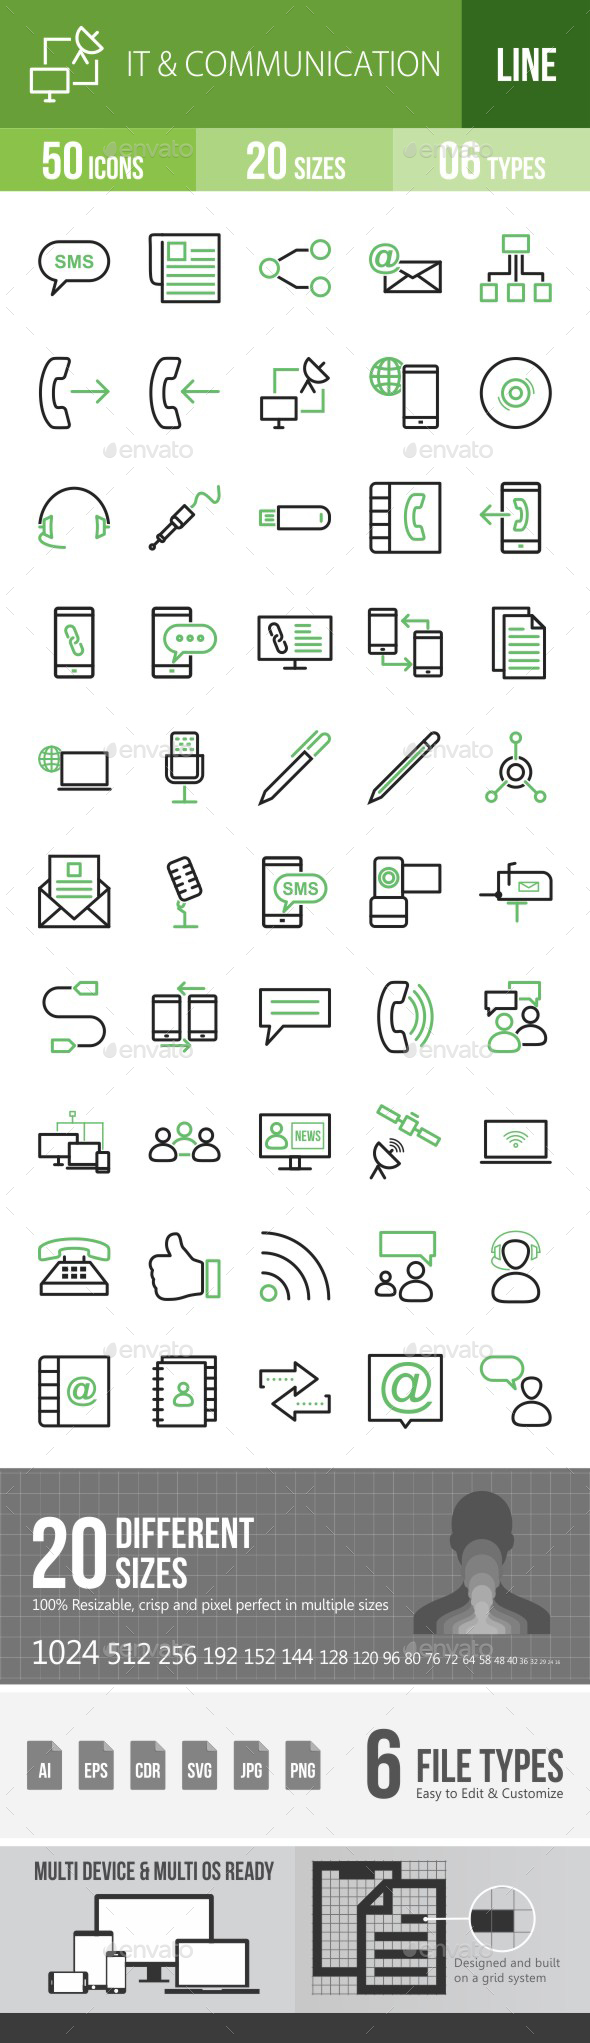 IT & Communication Green & Black Icons